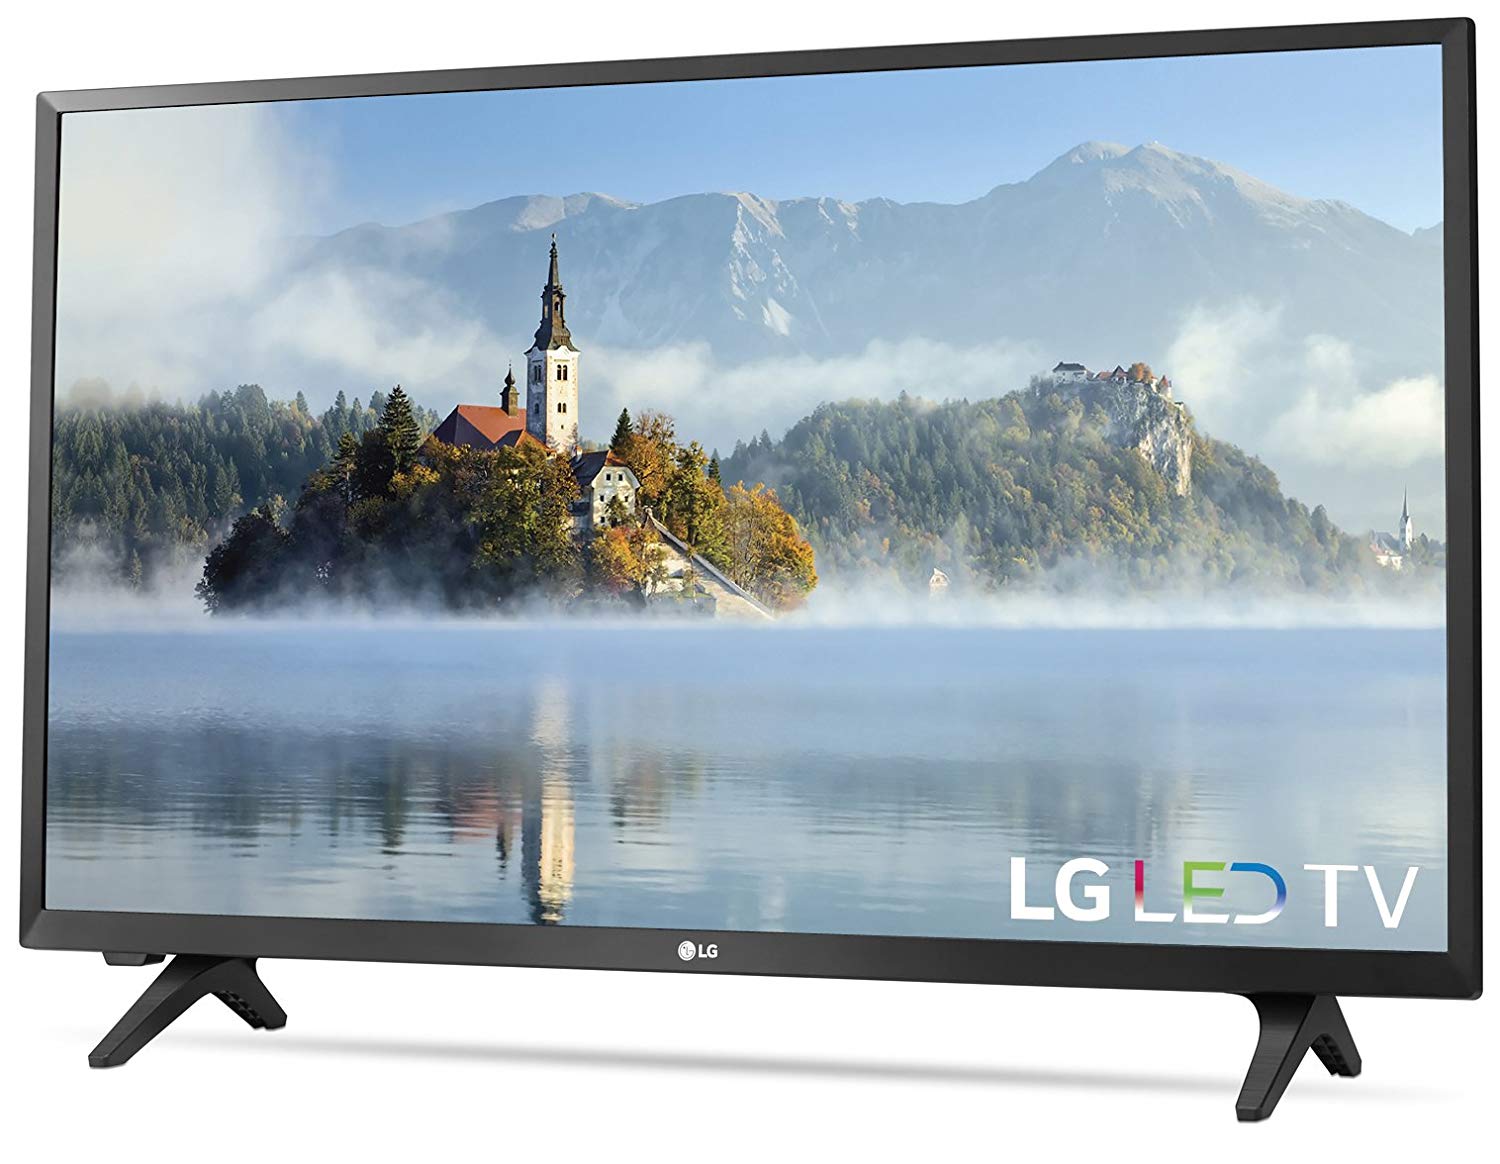 LG إلكترونيات 32LJ500B 32-Inch 720p LED TV (2017 Model)